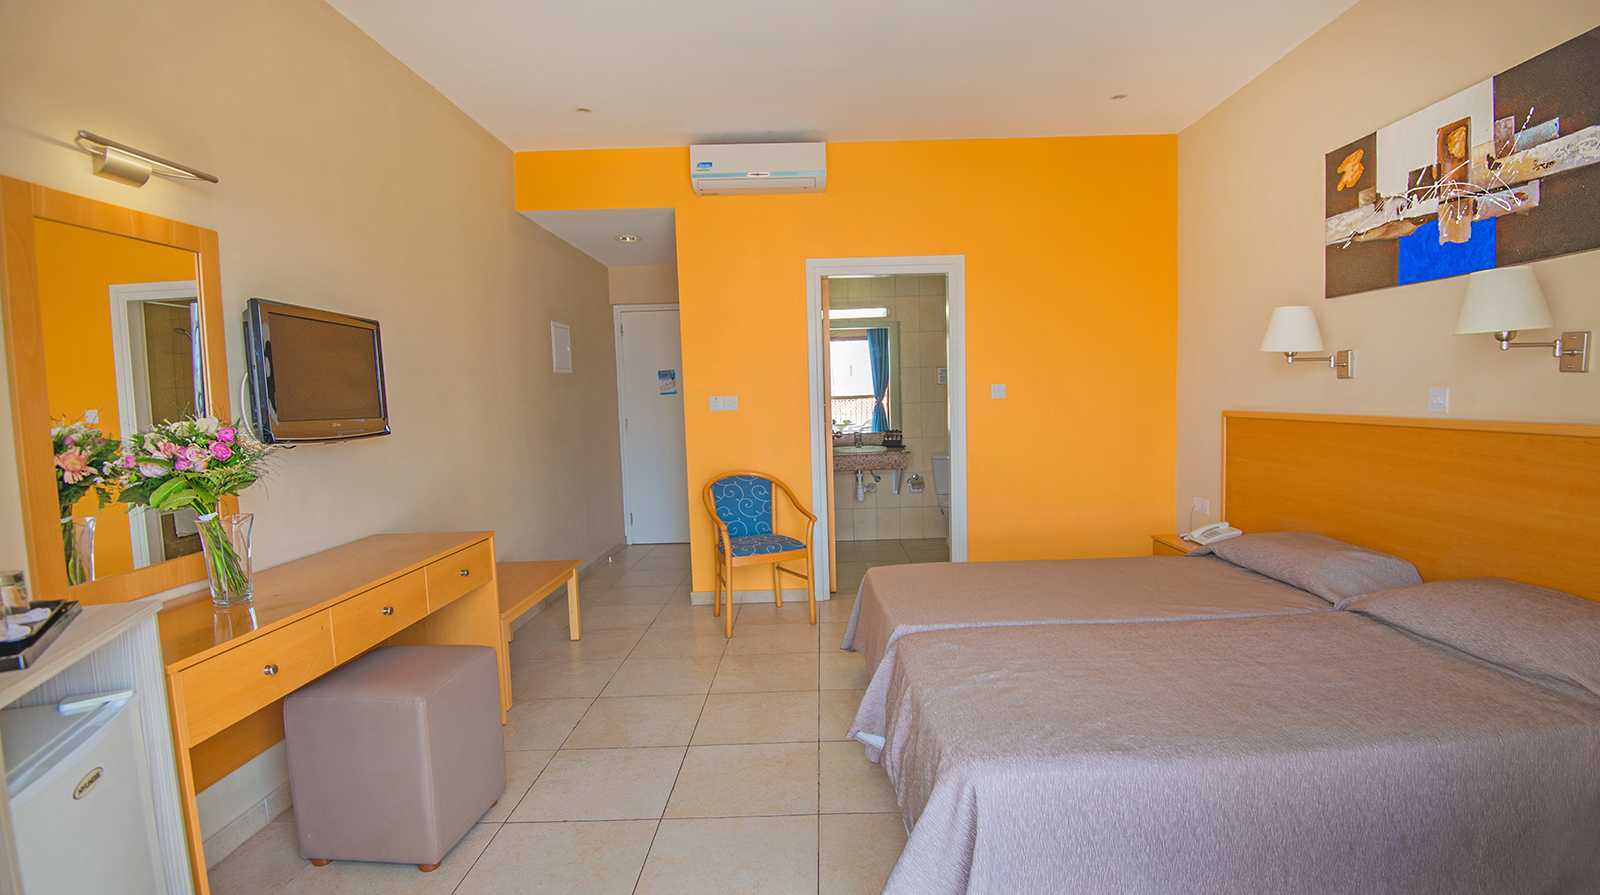 New Famagusta Hotel-Standardna soba.jpg